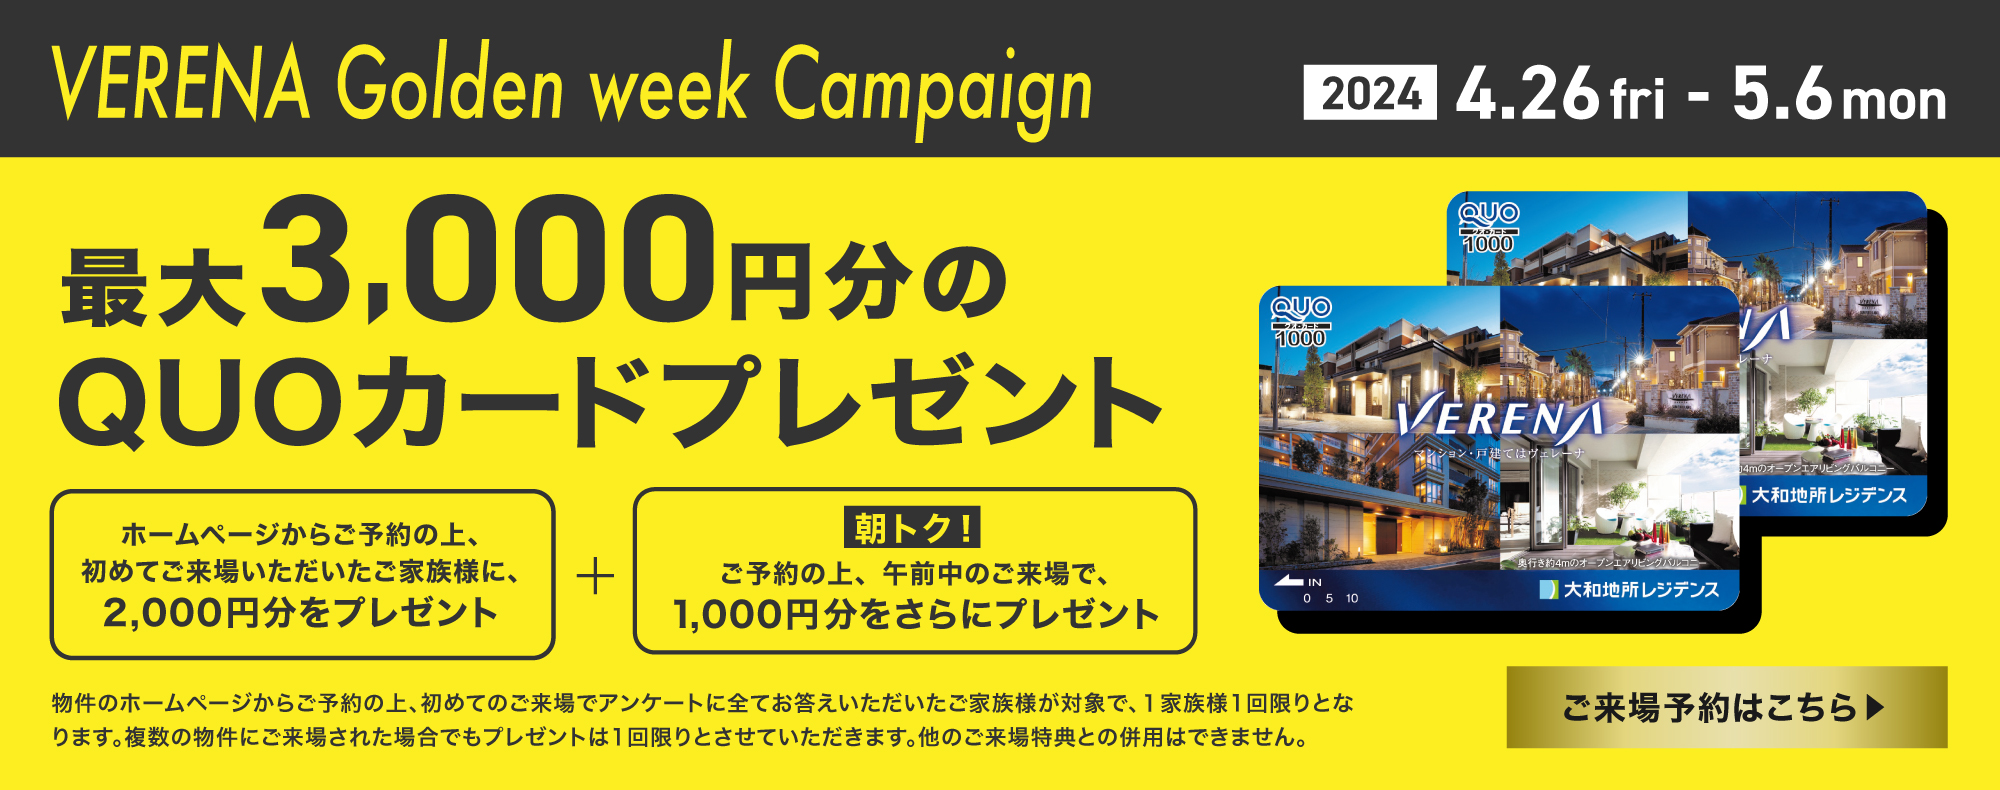 VERENA Golden week Campaign 最大3,000円分のQUOカードプレゼント